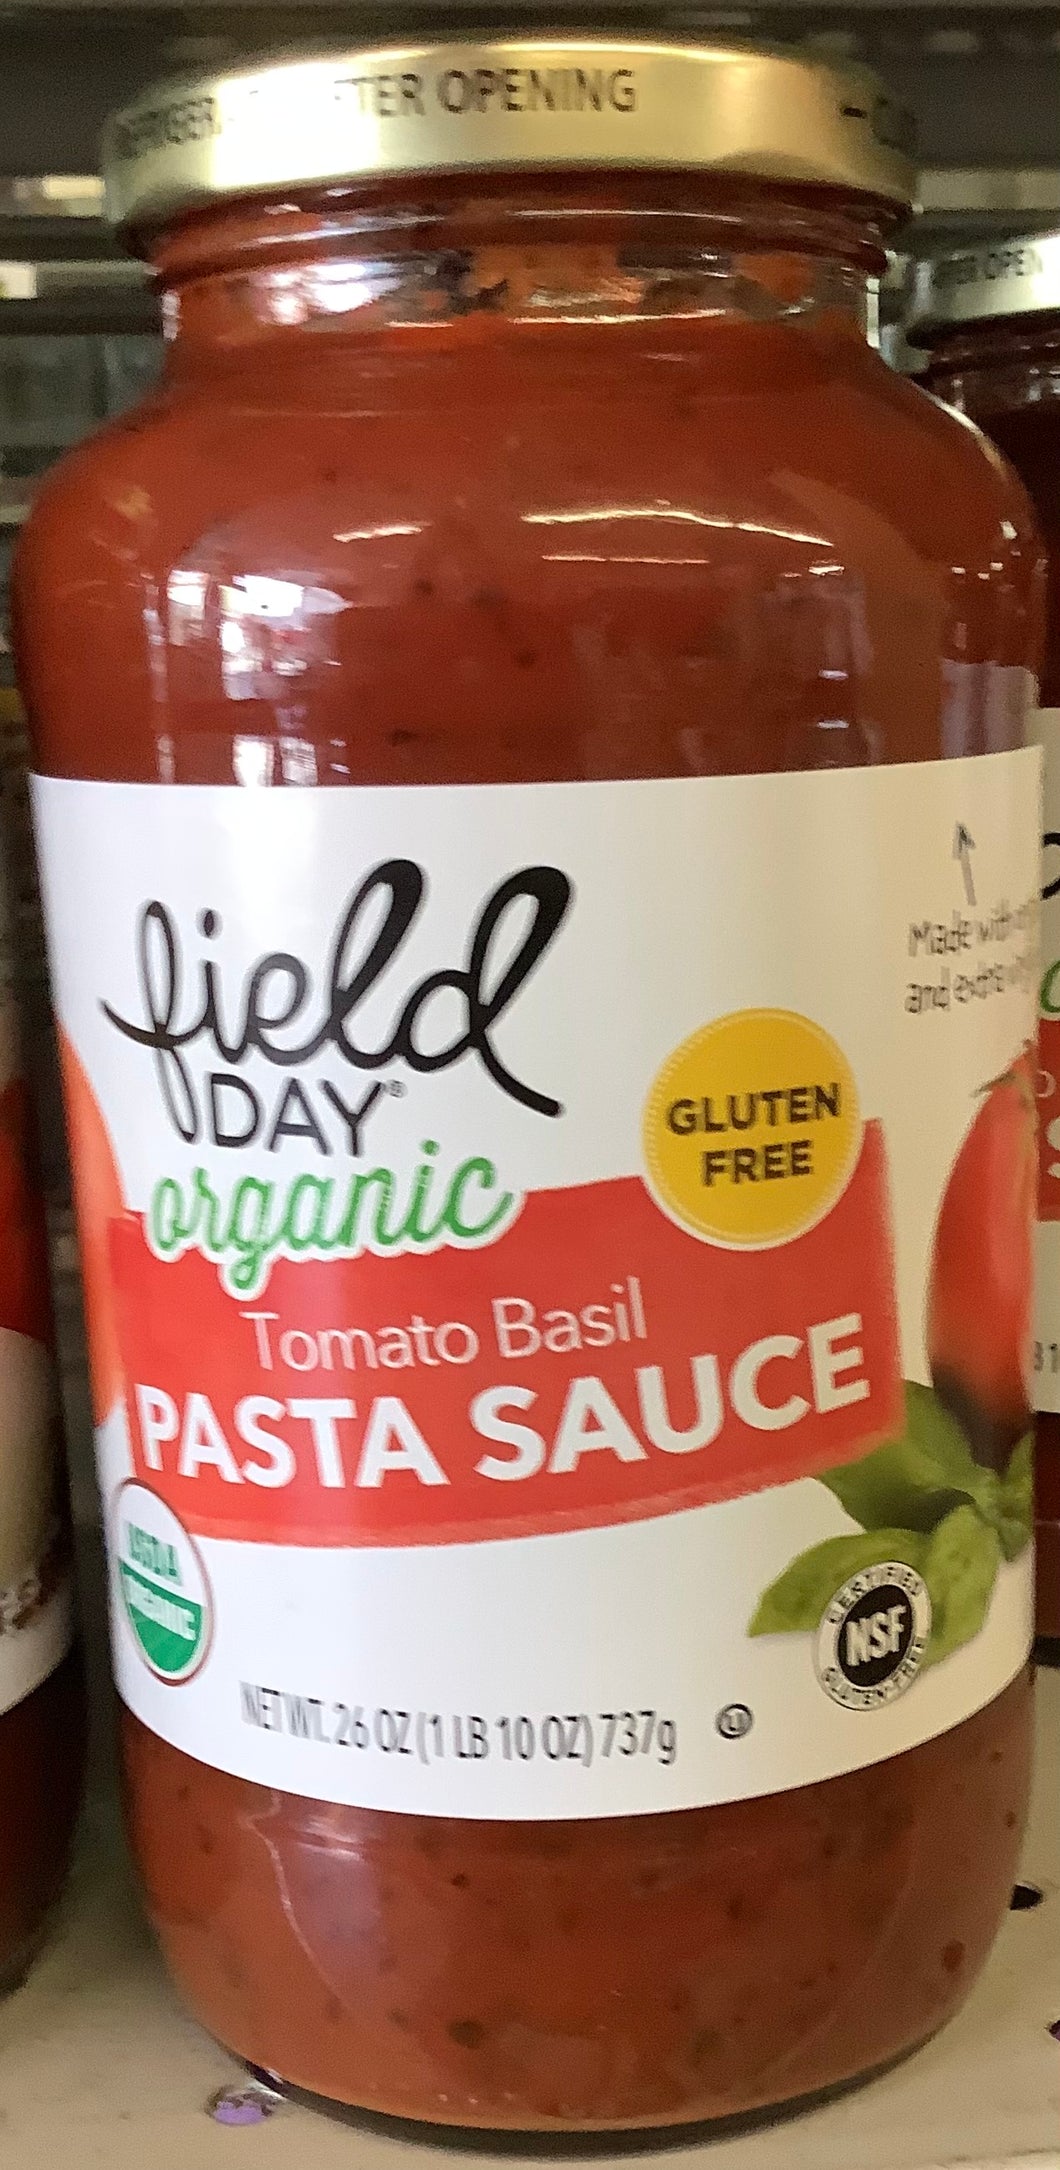 Pasta Sauce, Organic Tomato Basil, Field Day